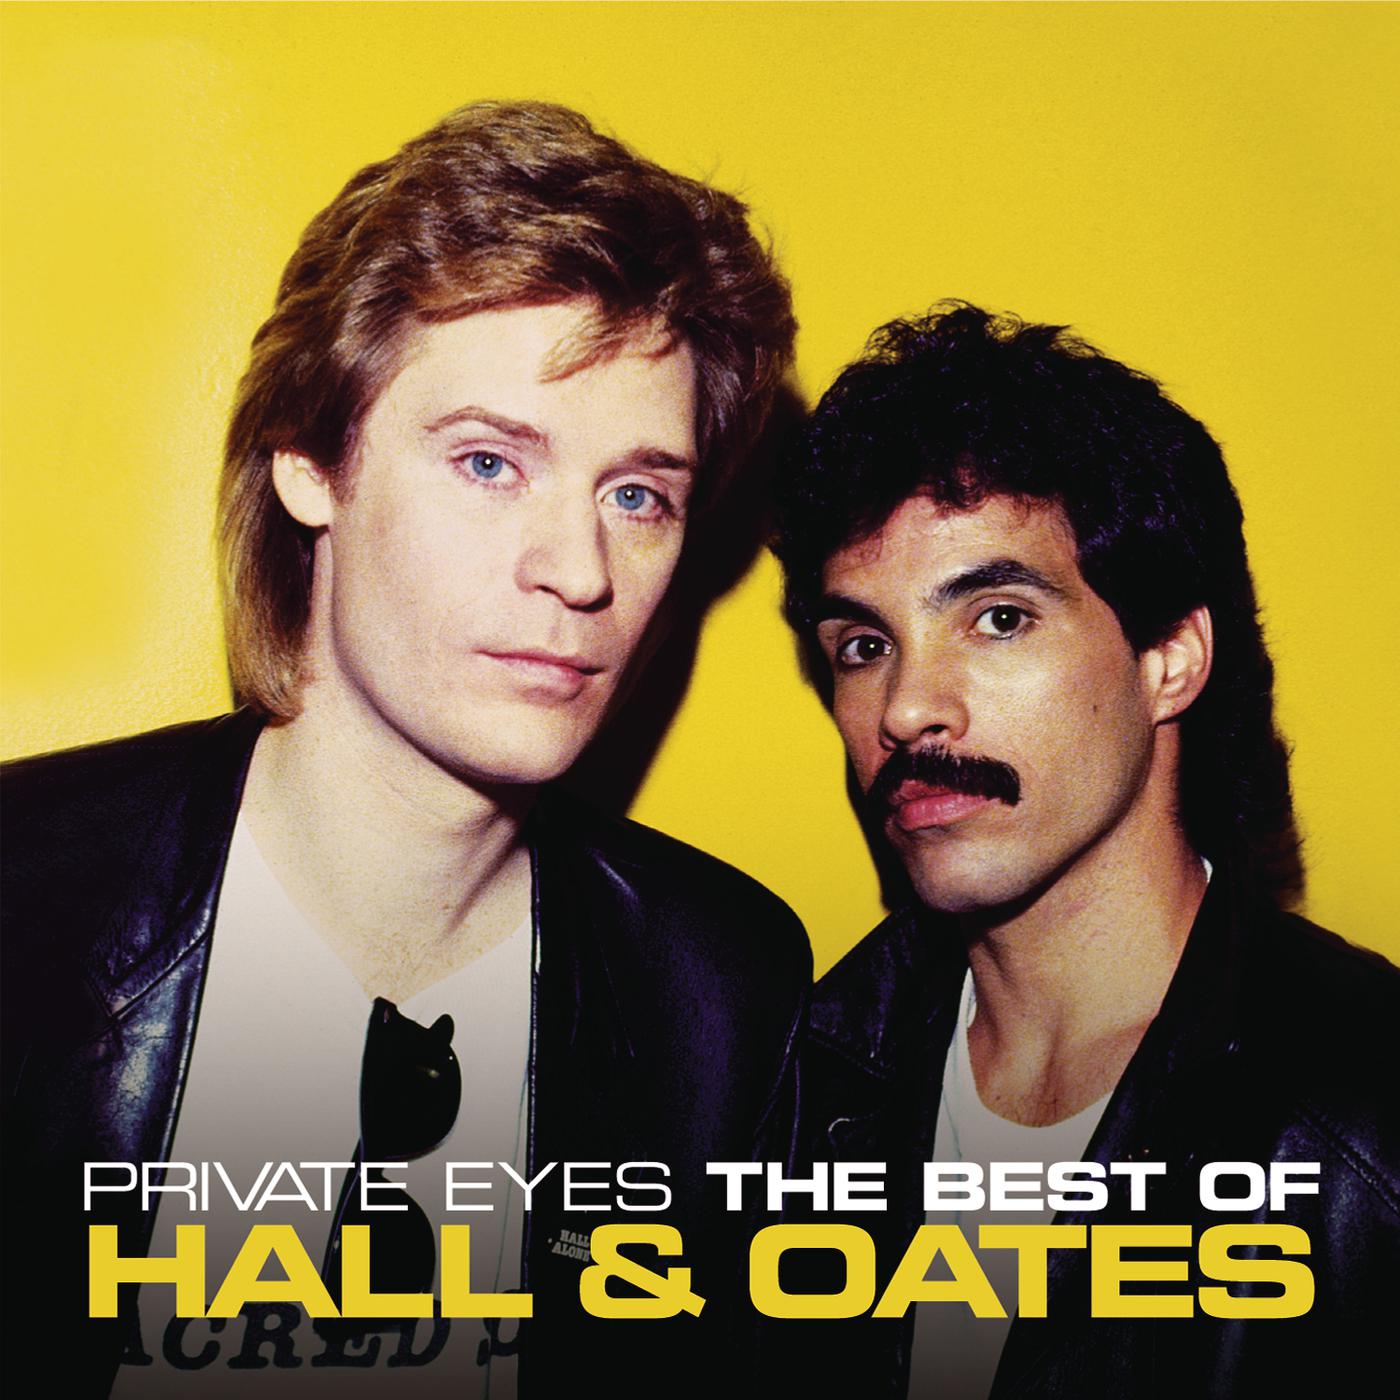 Группа hall. Daryl Hall & John oates. Группа Hall & oates. H2o обложка Daryl Hall John oates. Музыкальный дуэт Hall & oates.